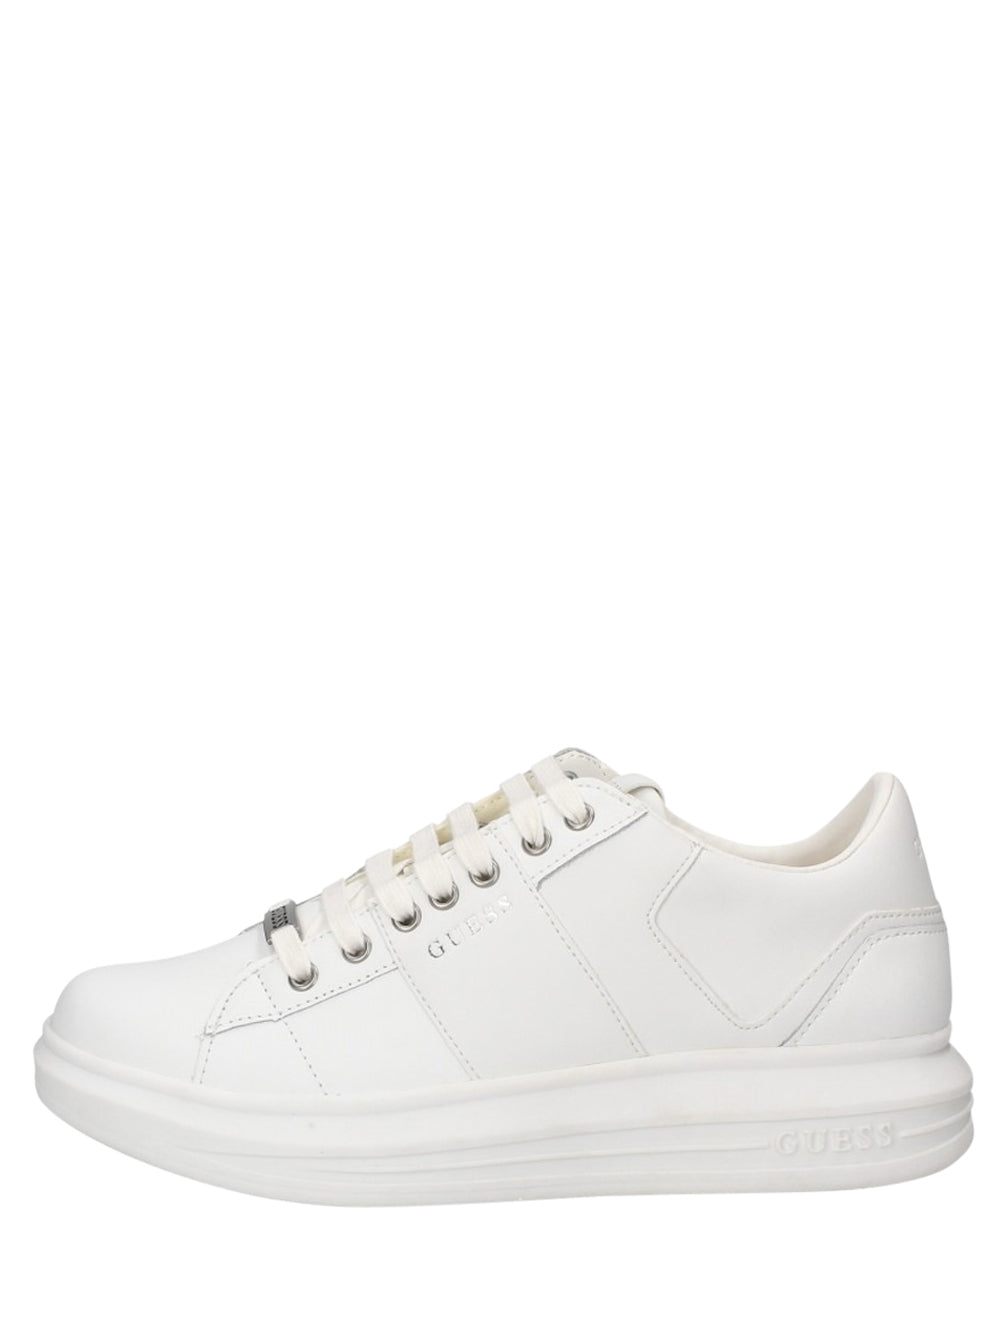 GUESS Sneakers Uomo - Bianco